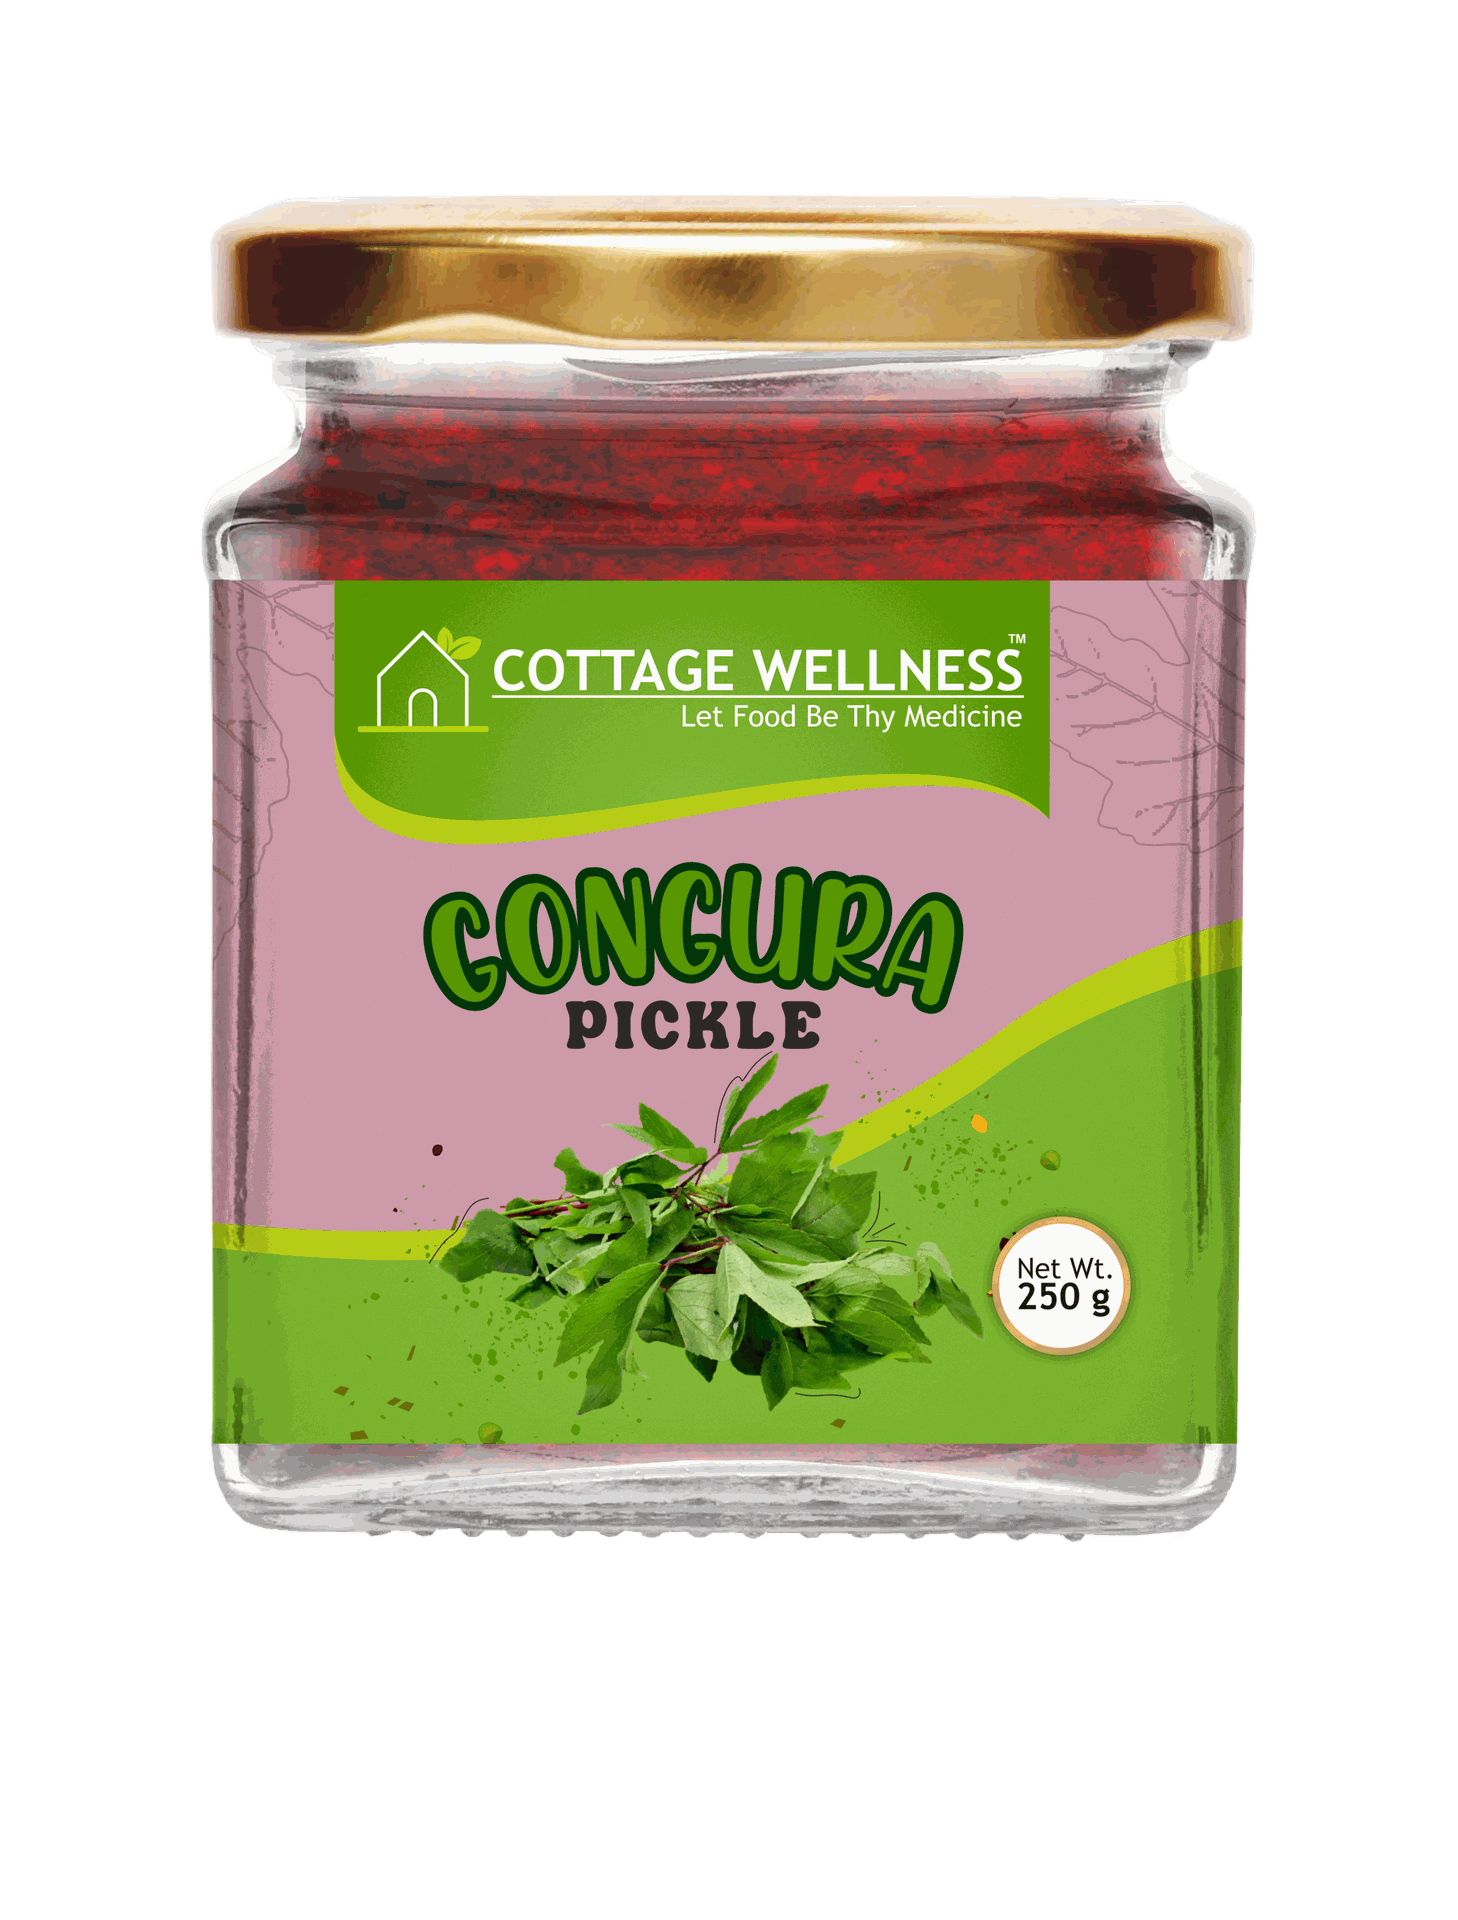 Cottage Wellness Home Made Gongura Pickle 250 gm - hfnl!fe